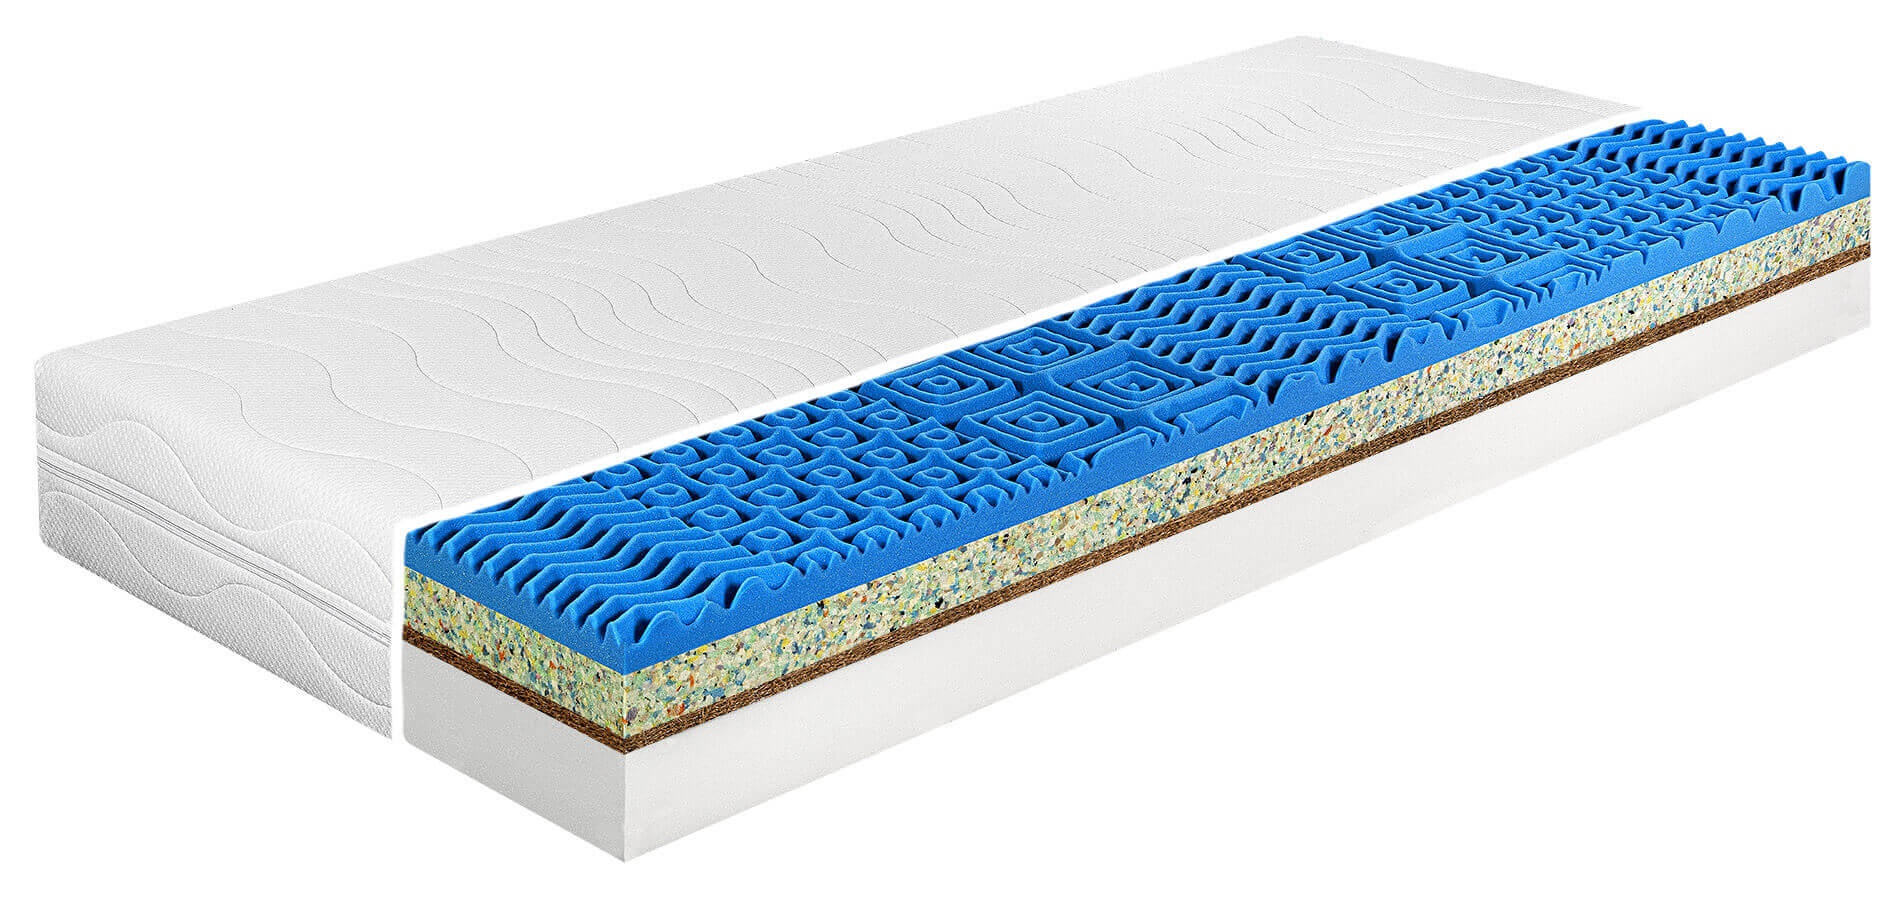 Sendvičová matrace ZEUS PLUS, výška 22 cm Rozměr: 180 x 200 cm, Materiál: chloe aktiv